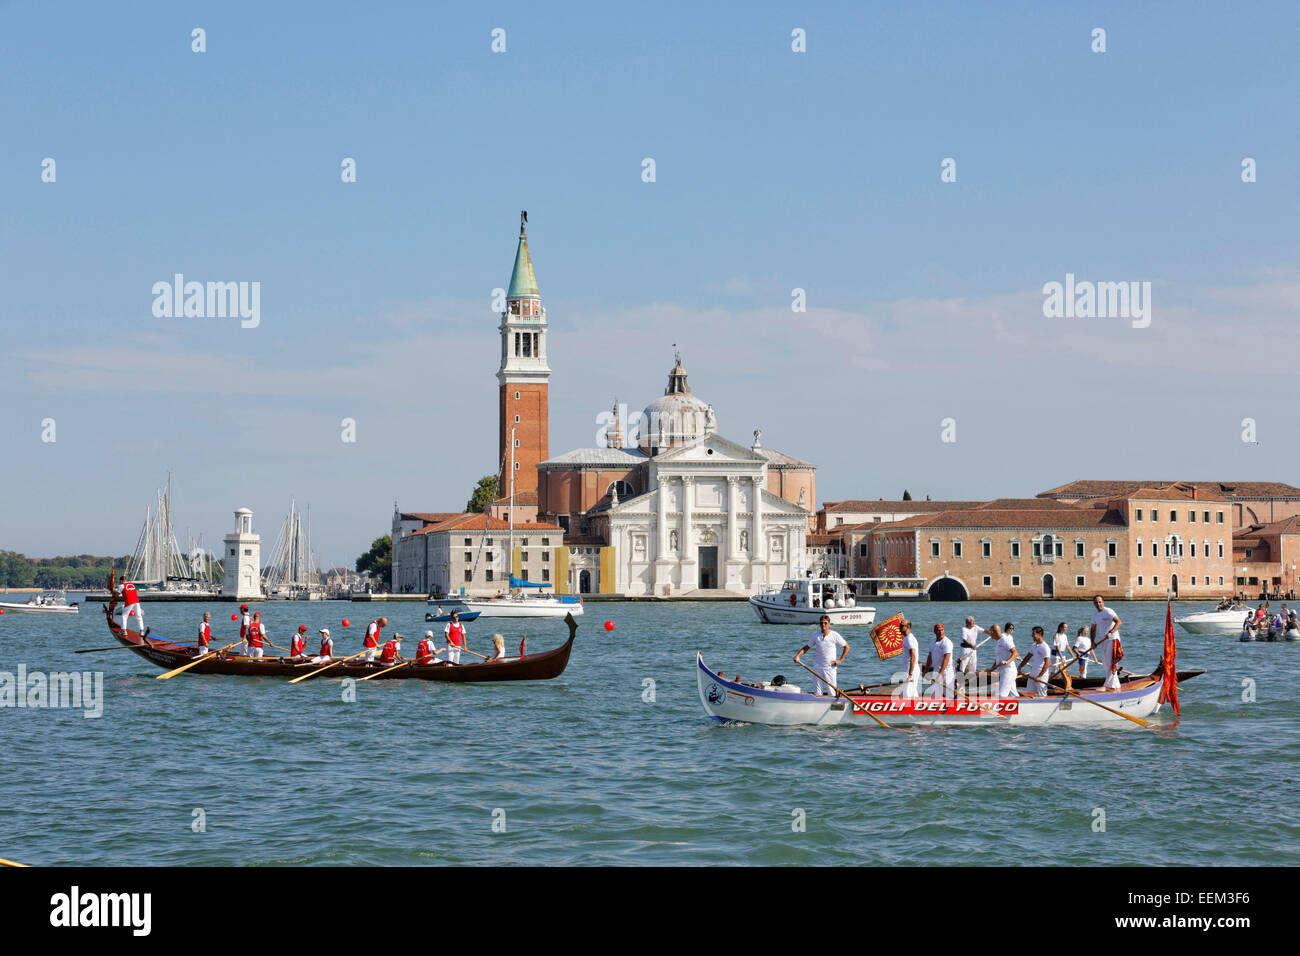 Regata Storica, historical regatta, on the Canal Grande, Venice, Veneto, Italy Stock Photo